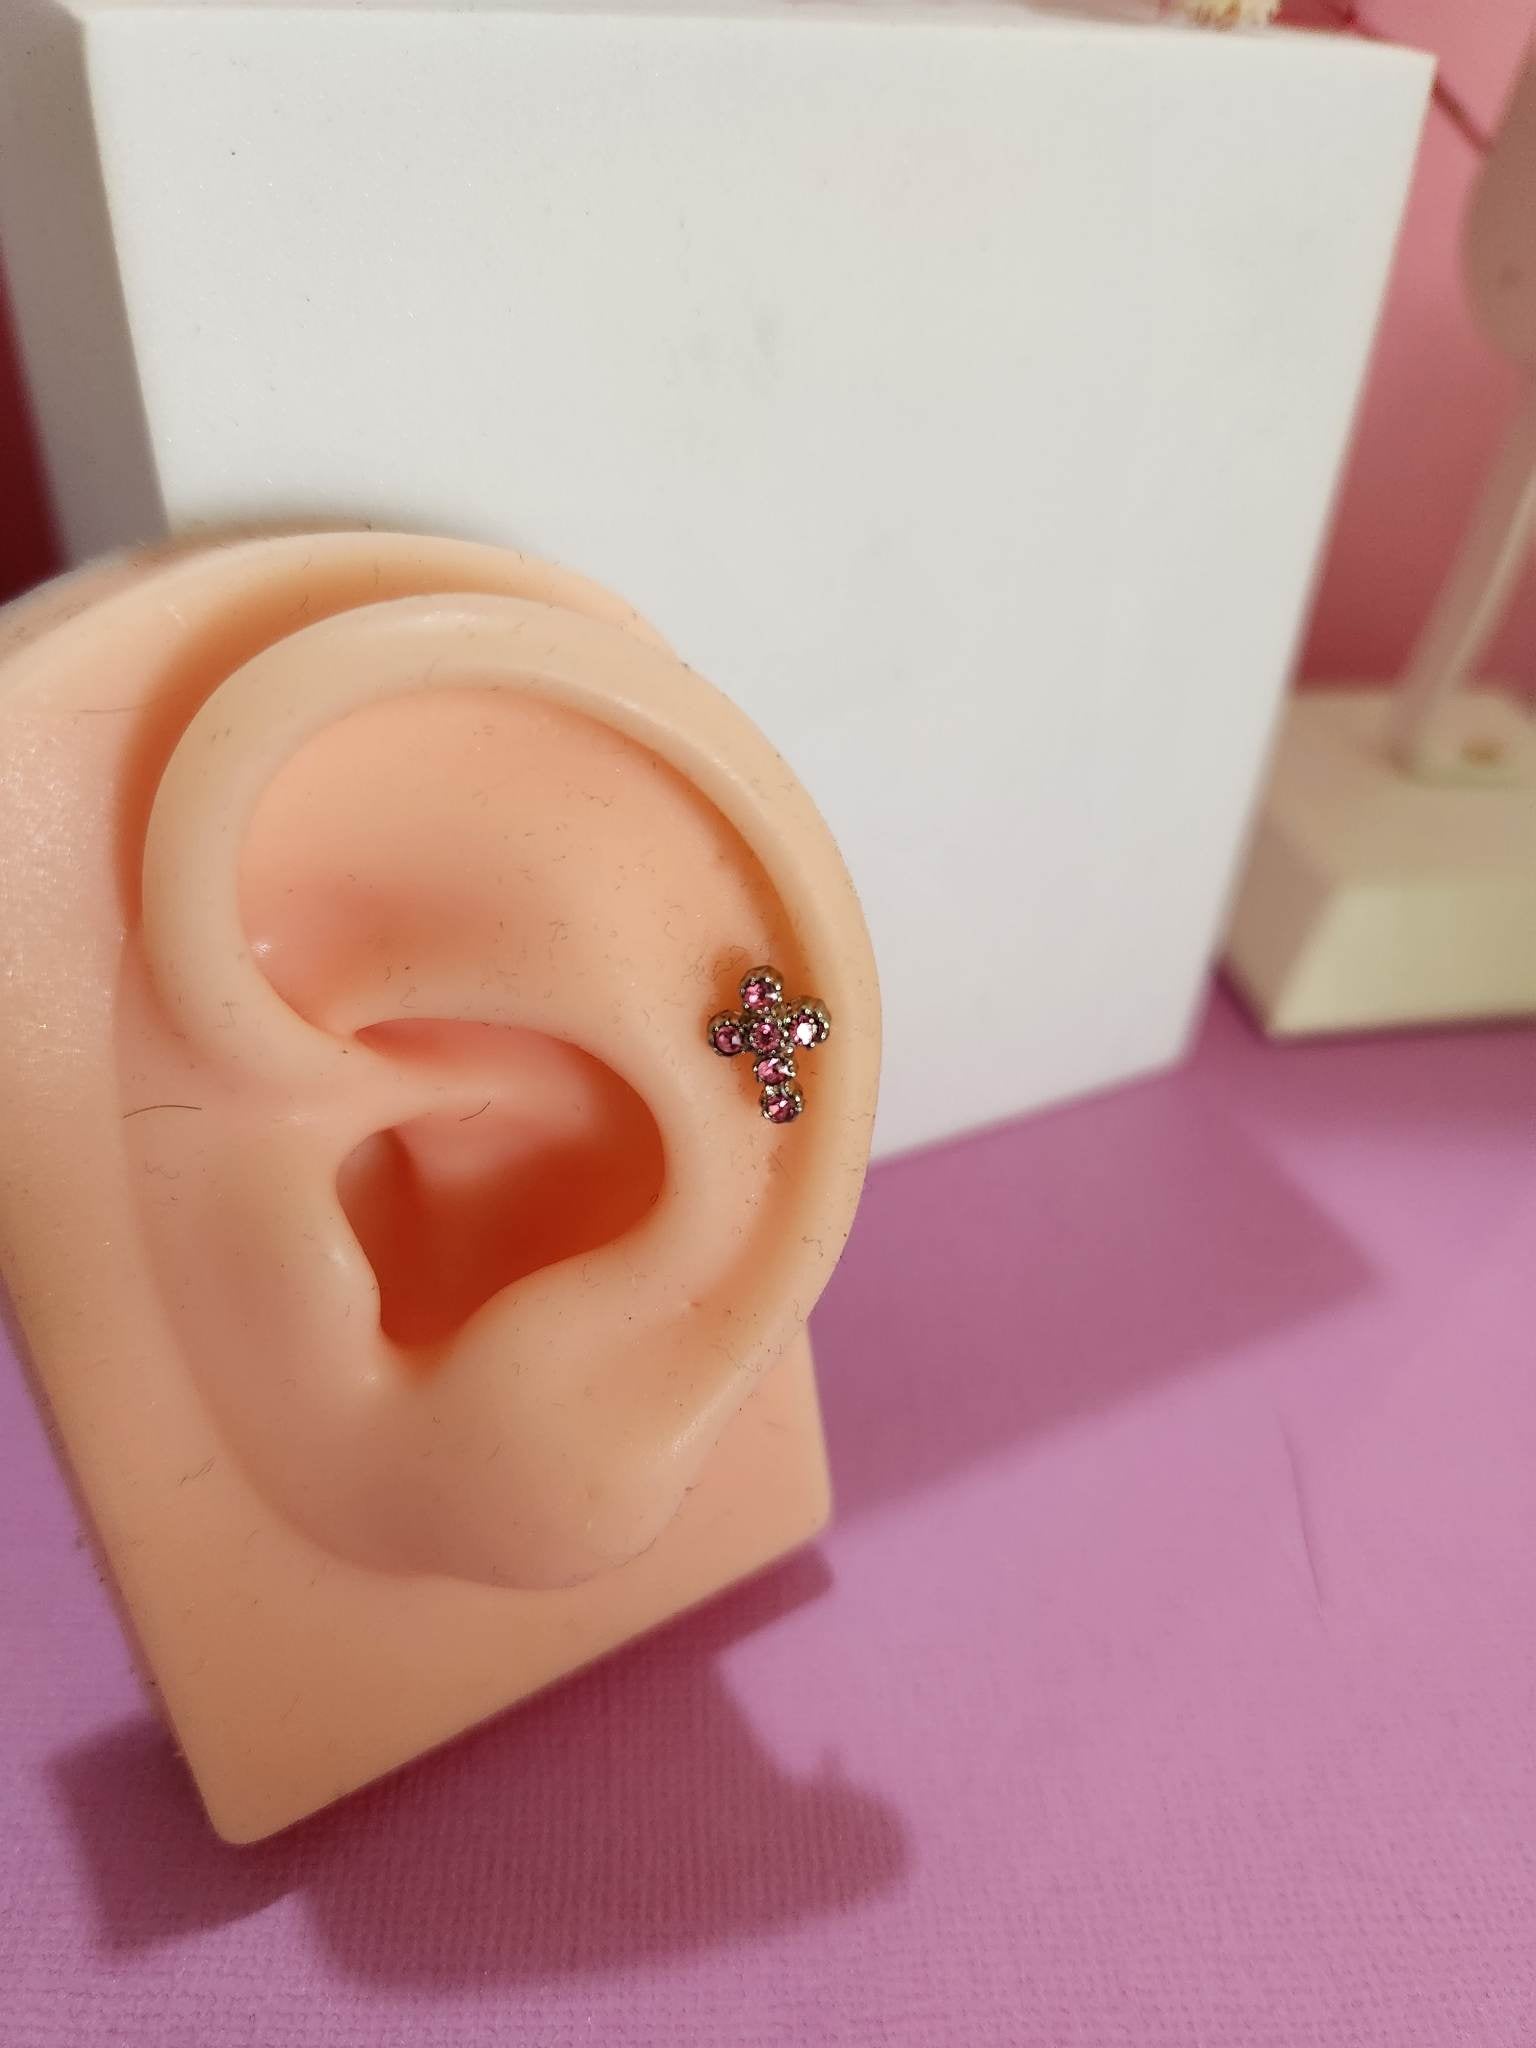 Pink Clear Cross Tragus Cartilage Ear Piercing Bars 16g 6mm - Pierced n Proud